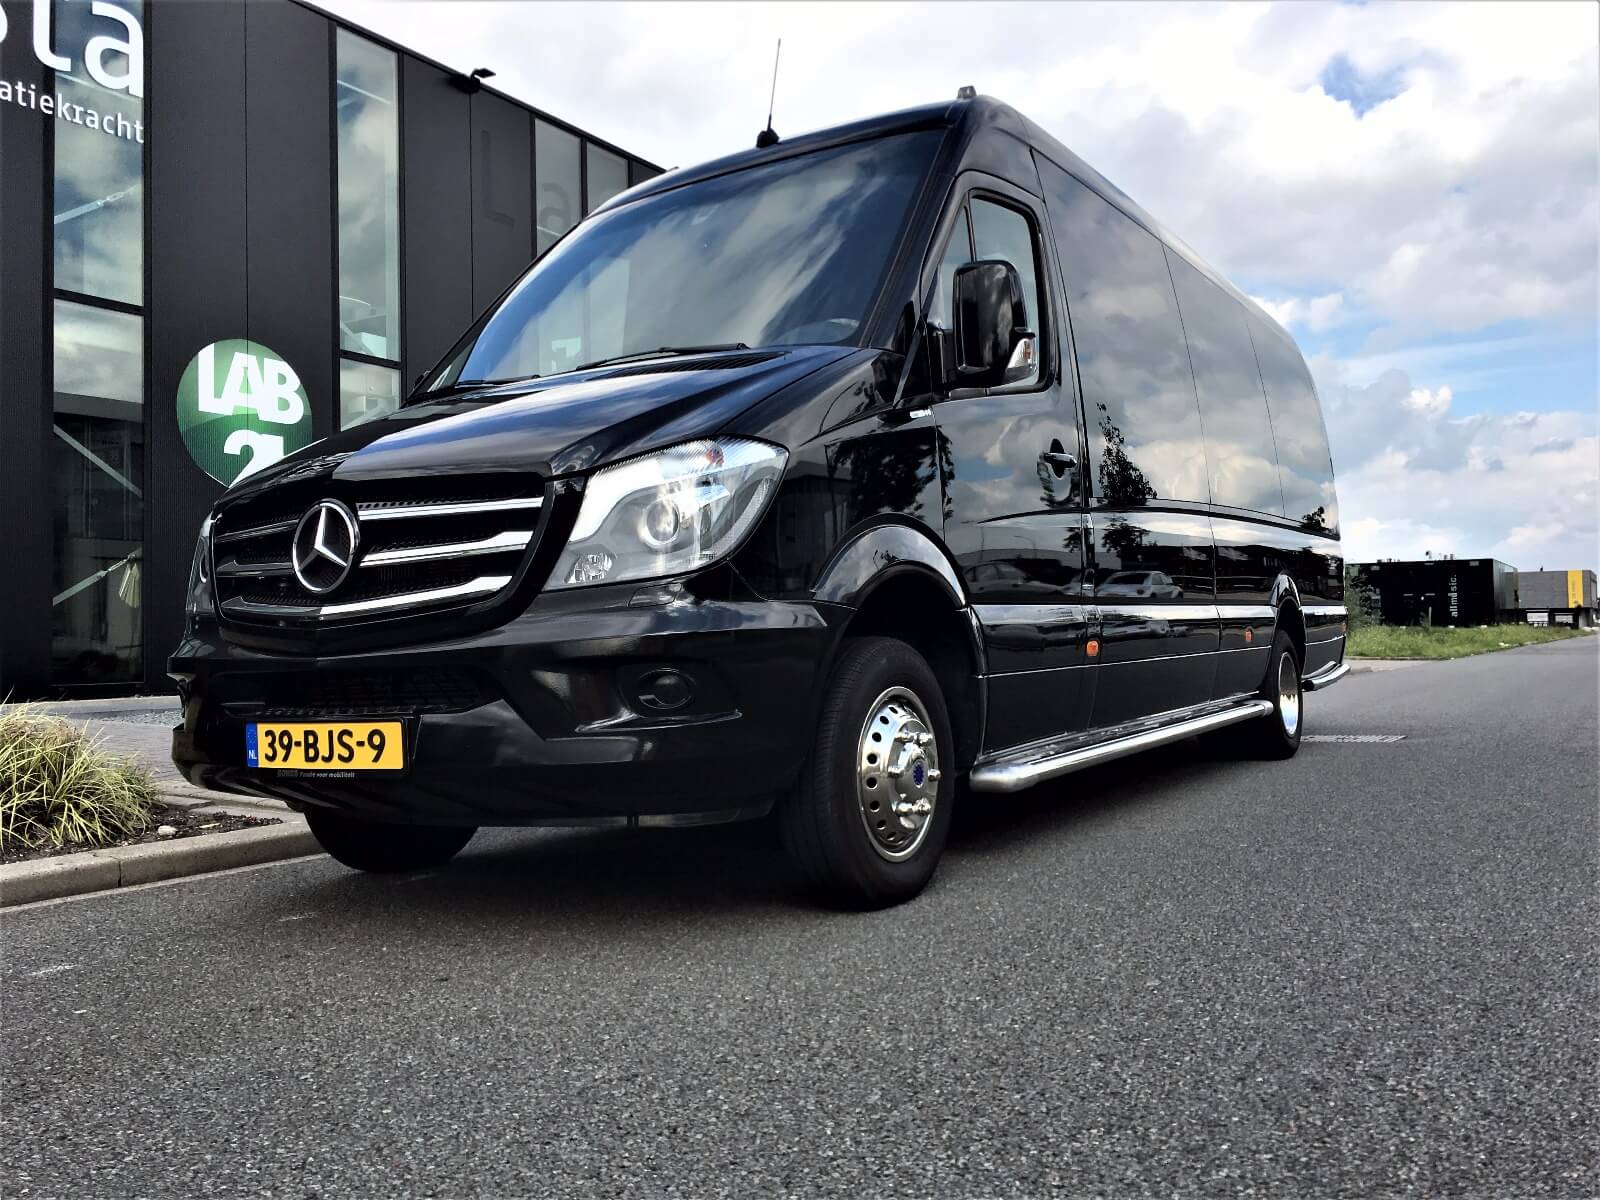 Alquila un 16 asiento Minibús (Mercedes  Sprinter 2017) de Direct Vip Service en Amsterdam 